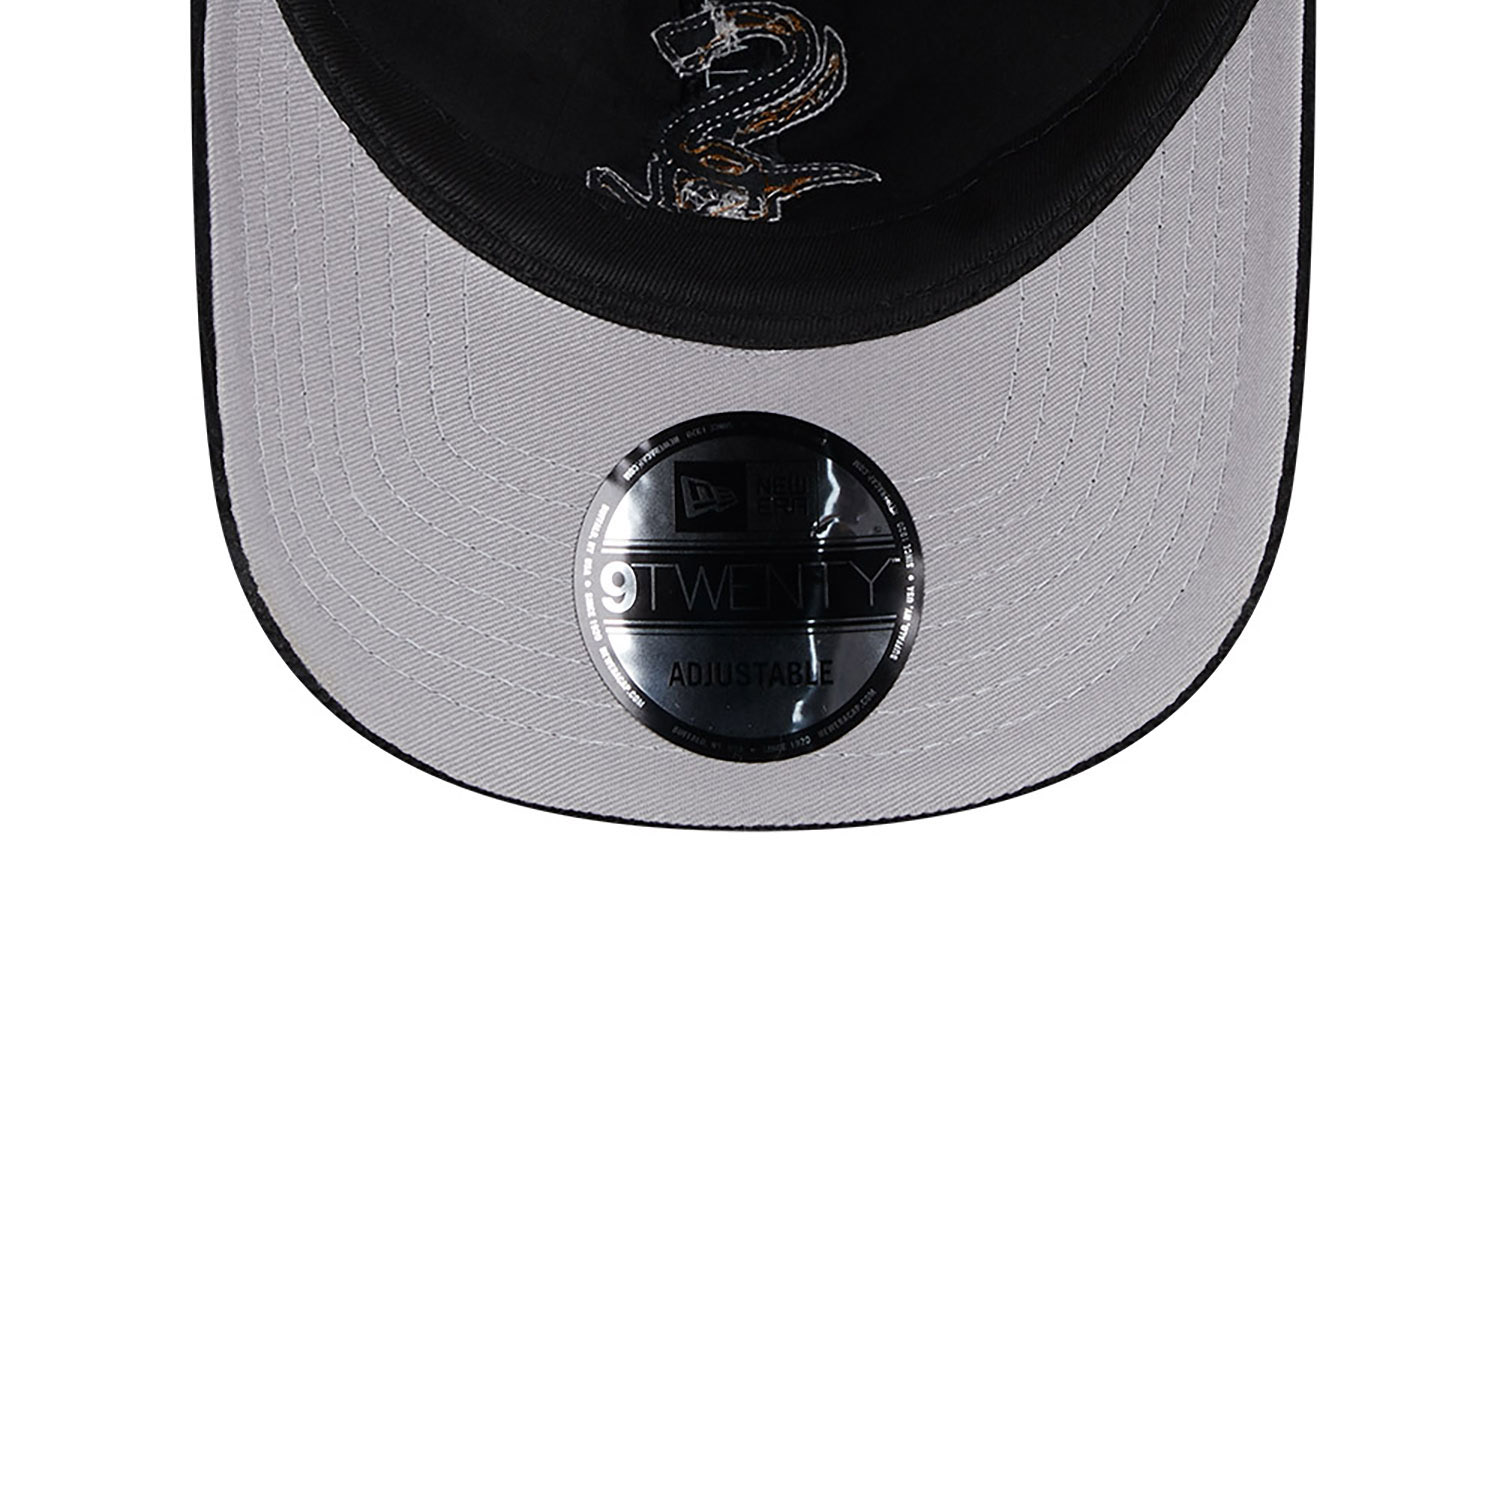 Chicago White Sox Cord Black 9TWENTY Adjustable Cap